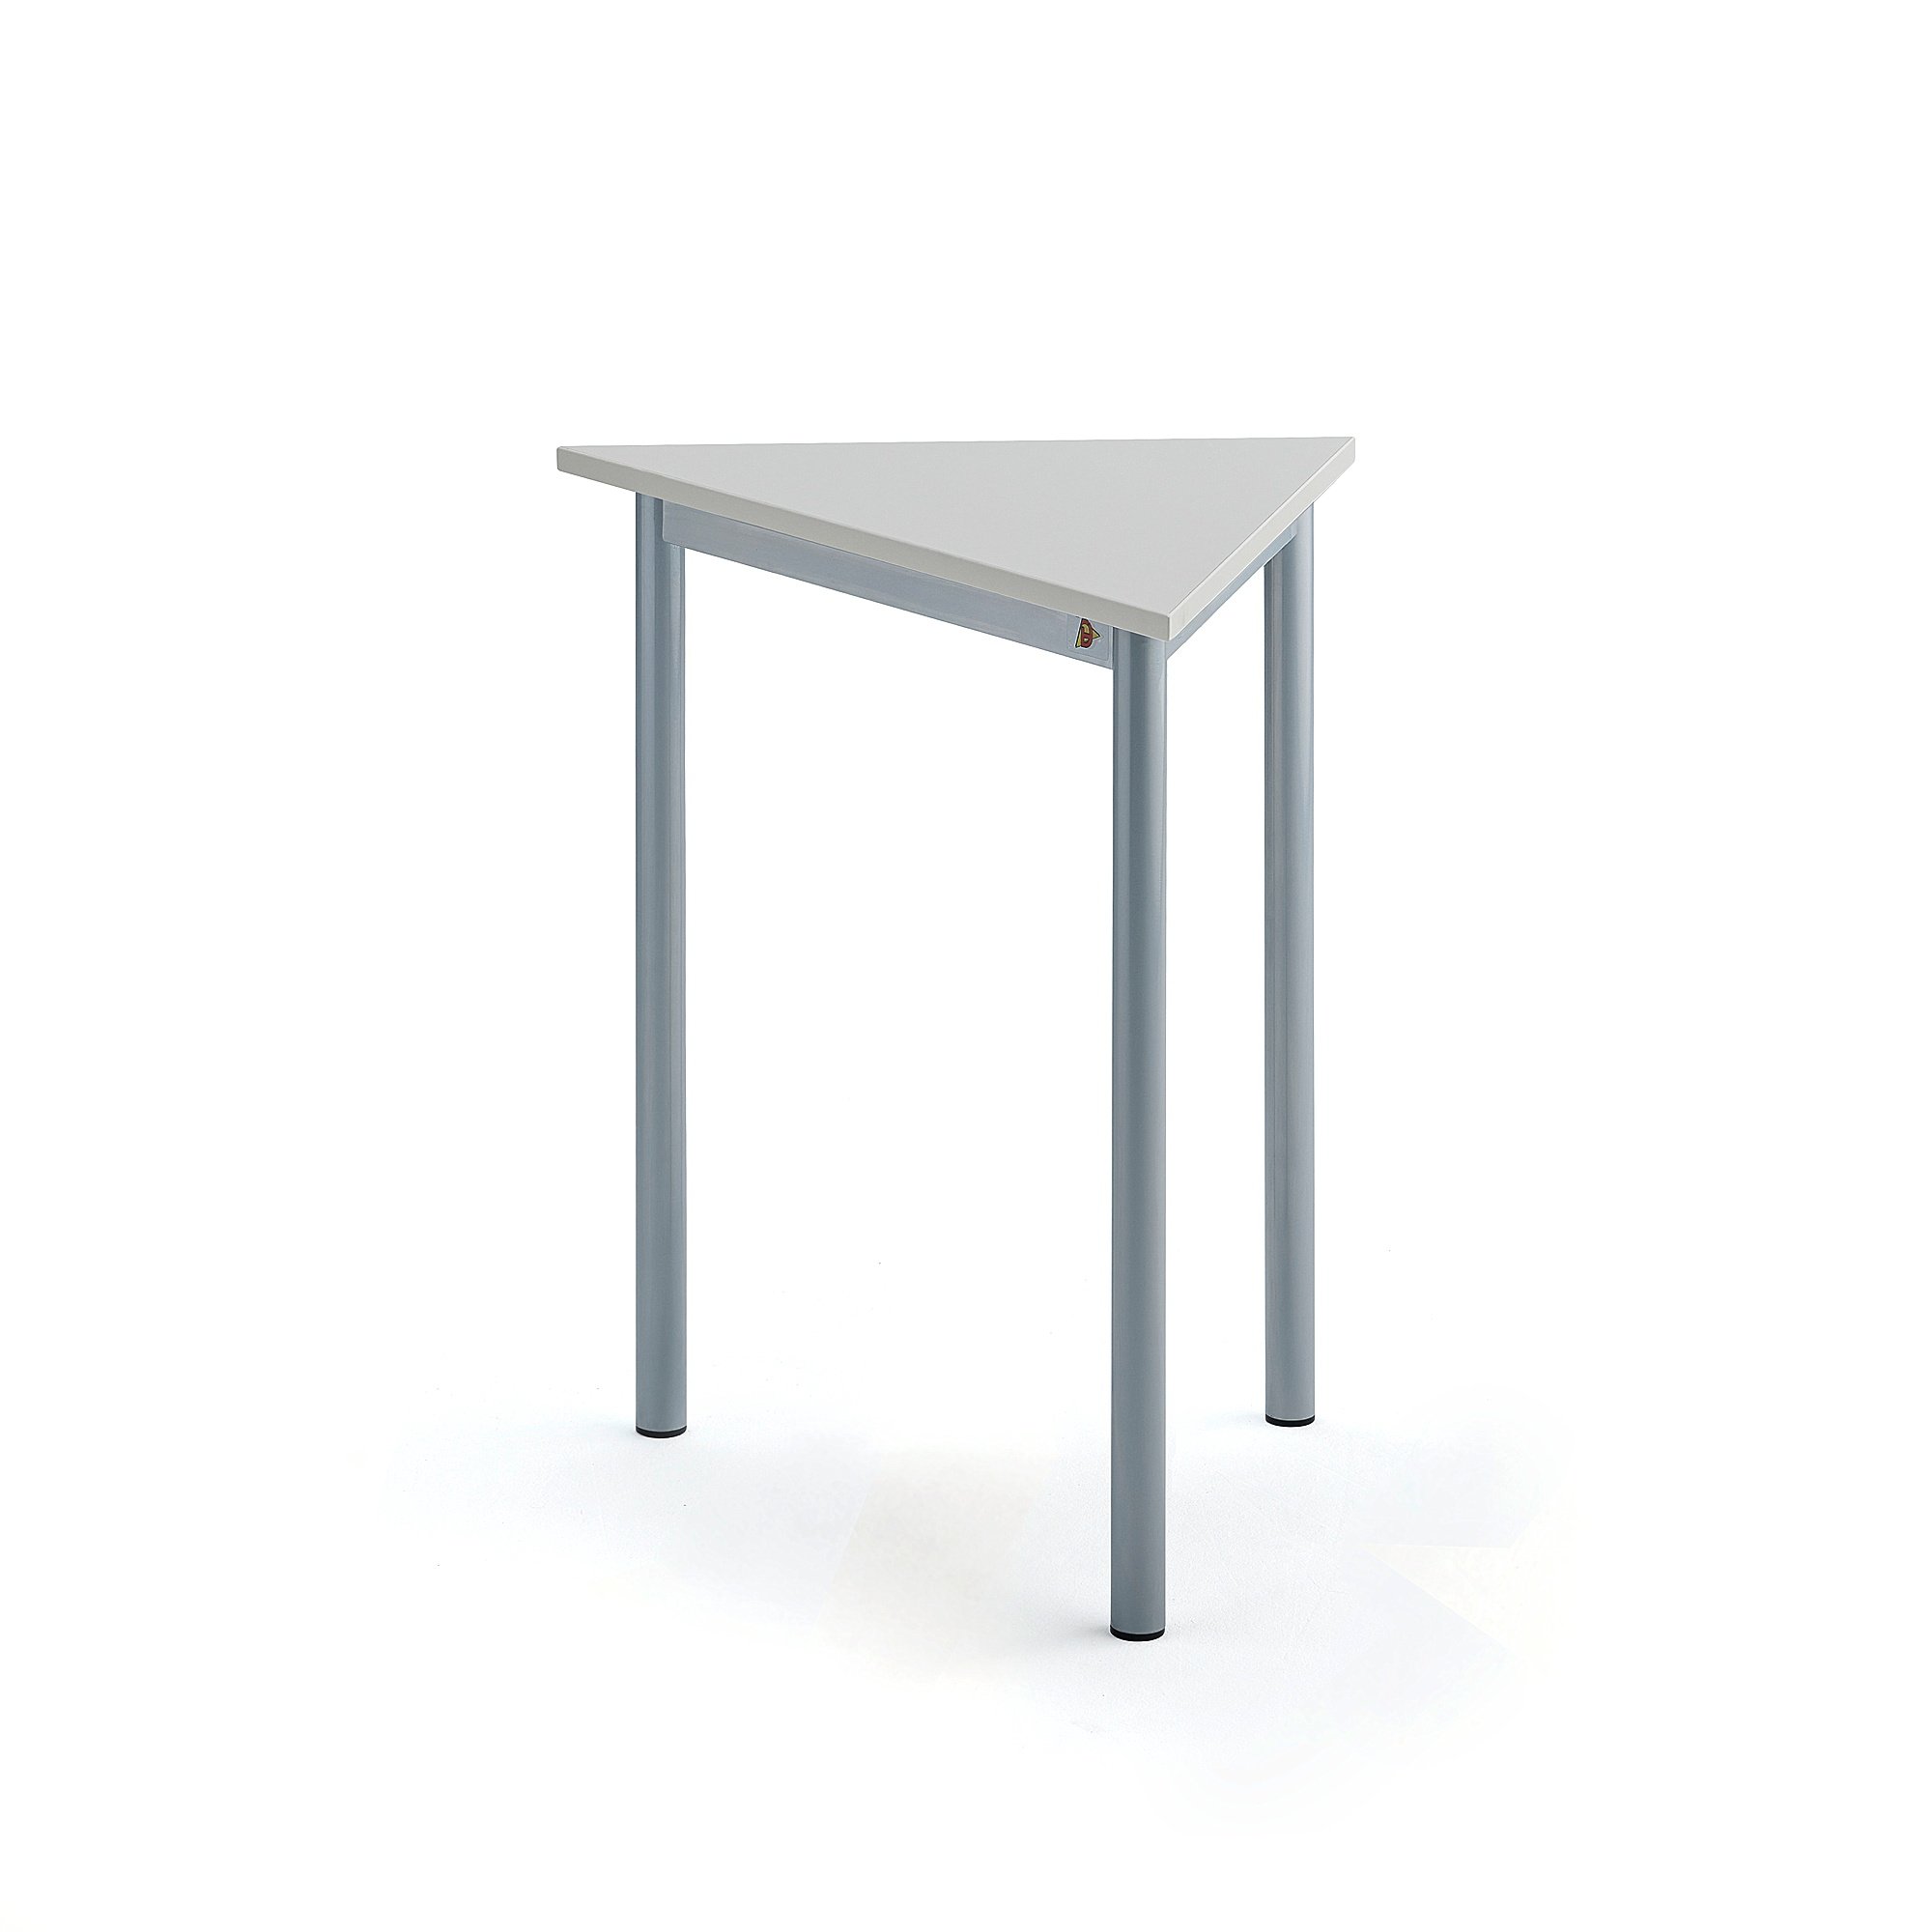 Stůl SONITUS TRIANGEL, 700x600x720 mm, stříbrné nohy, HPL deska tlumící hluk, šedá